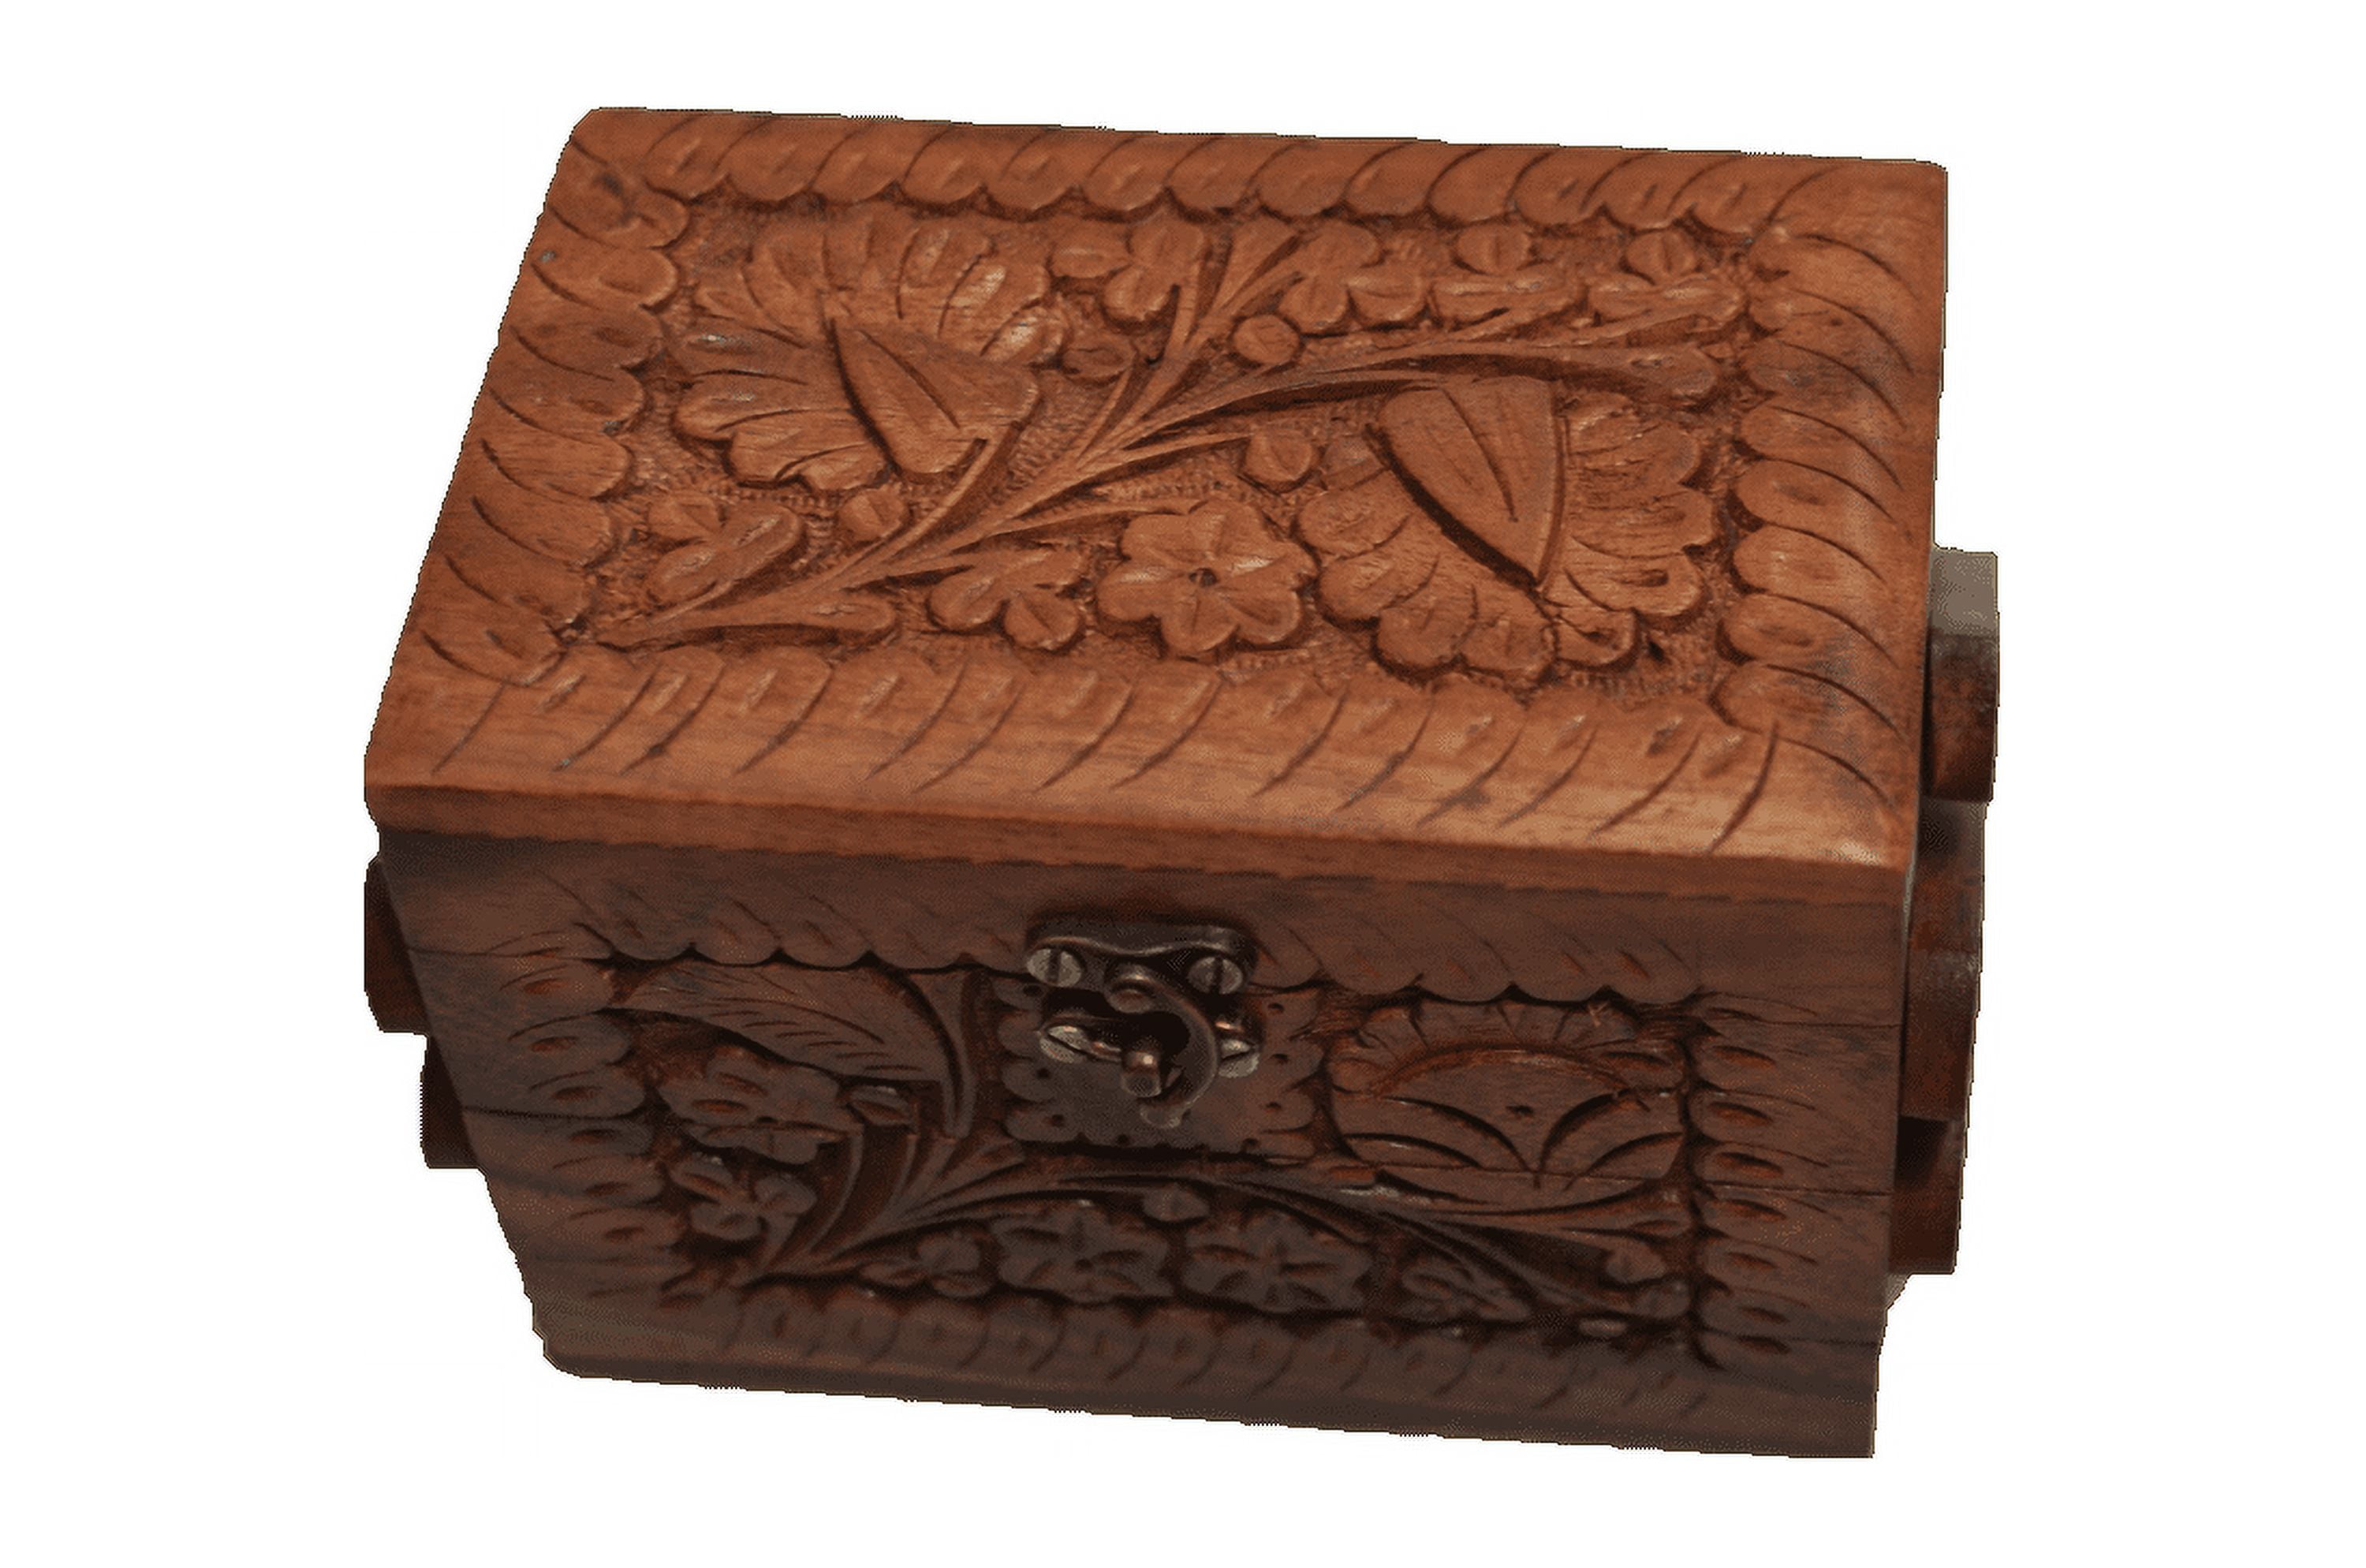 Ms. box] American style top wooden jewelry box (ornament box